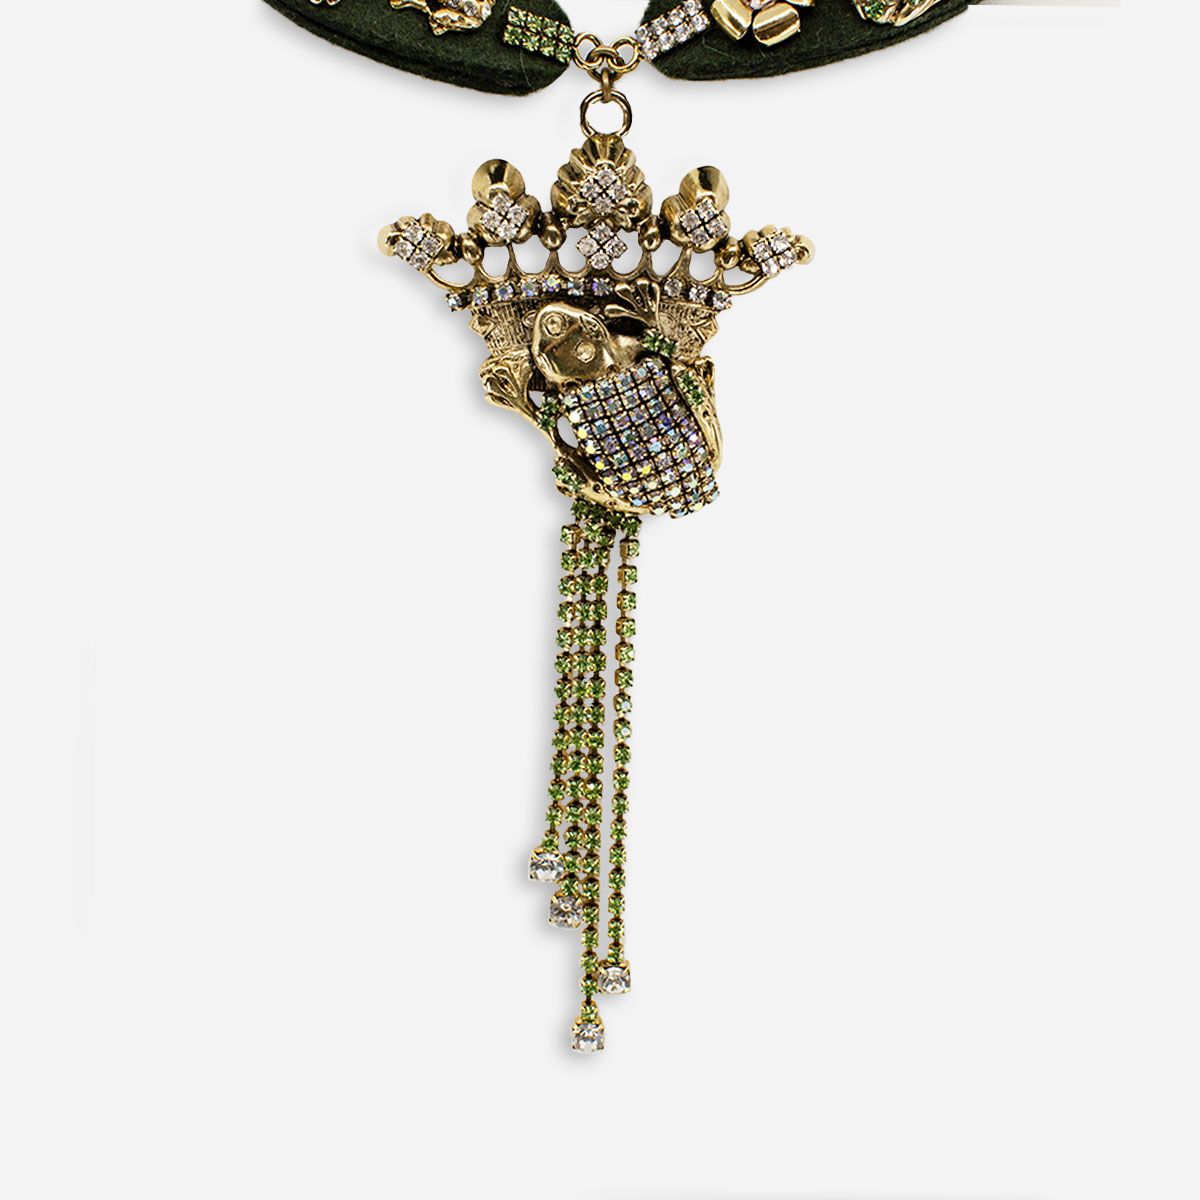 vintage statement collar necklace, gold crown pendant